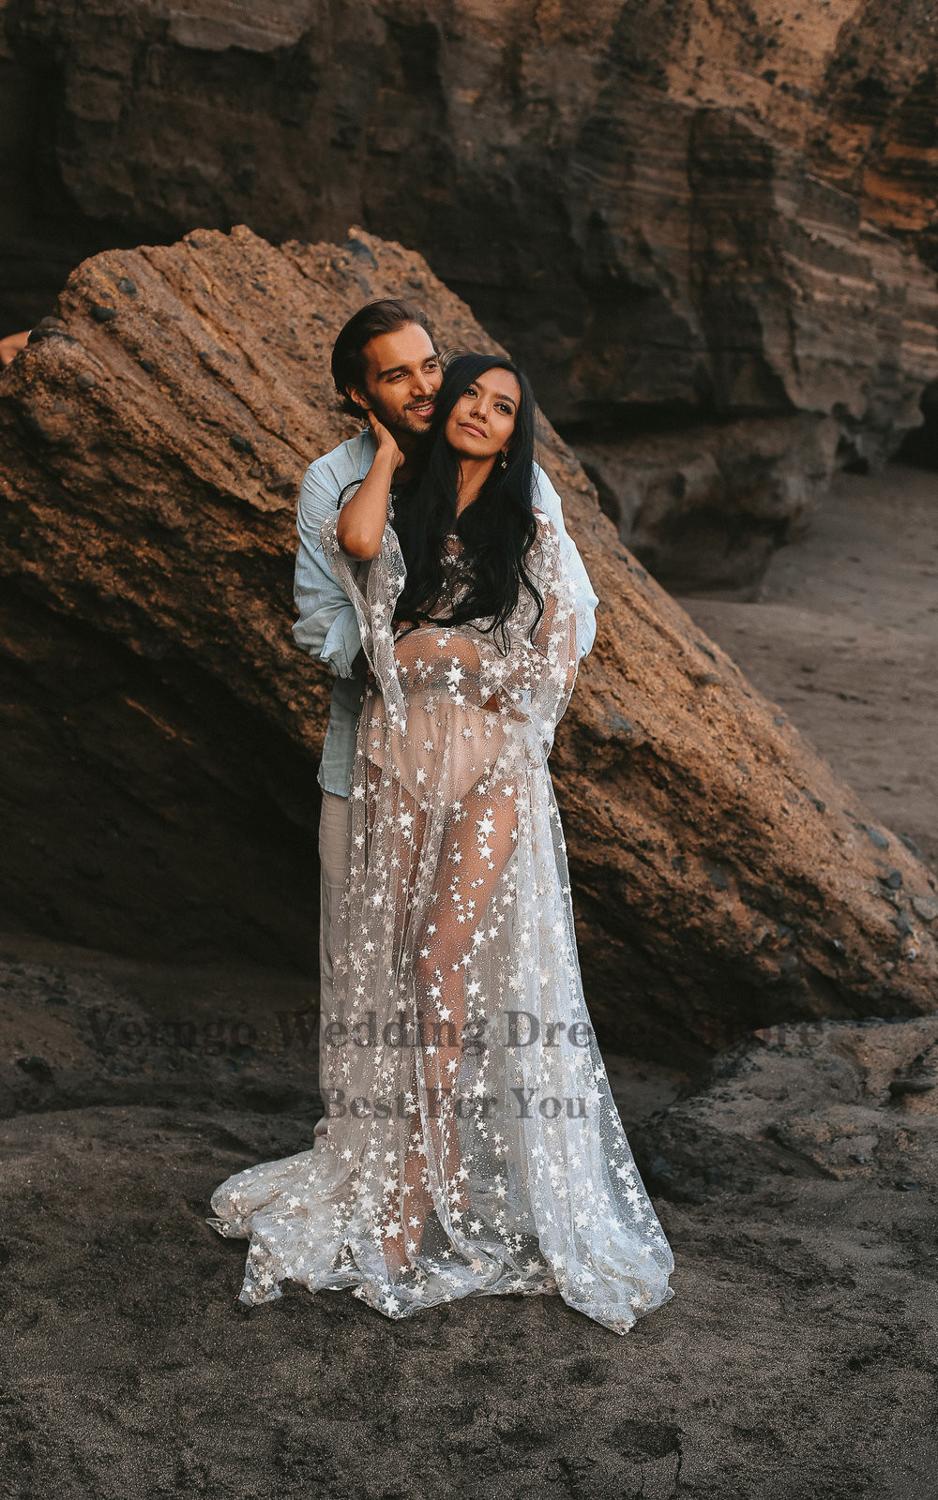 Verngo Sparkles Counting Stars Beach Wedding Dress Boho Lace Shine Beads Long Sleeves Modern Bohemian Bridal Gowns Glisten 2021